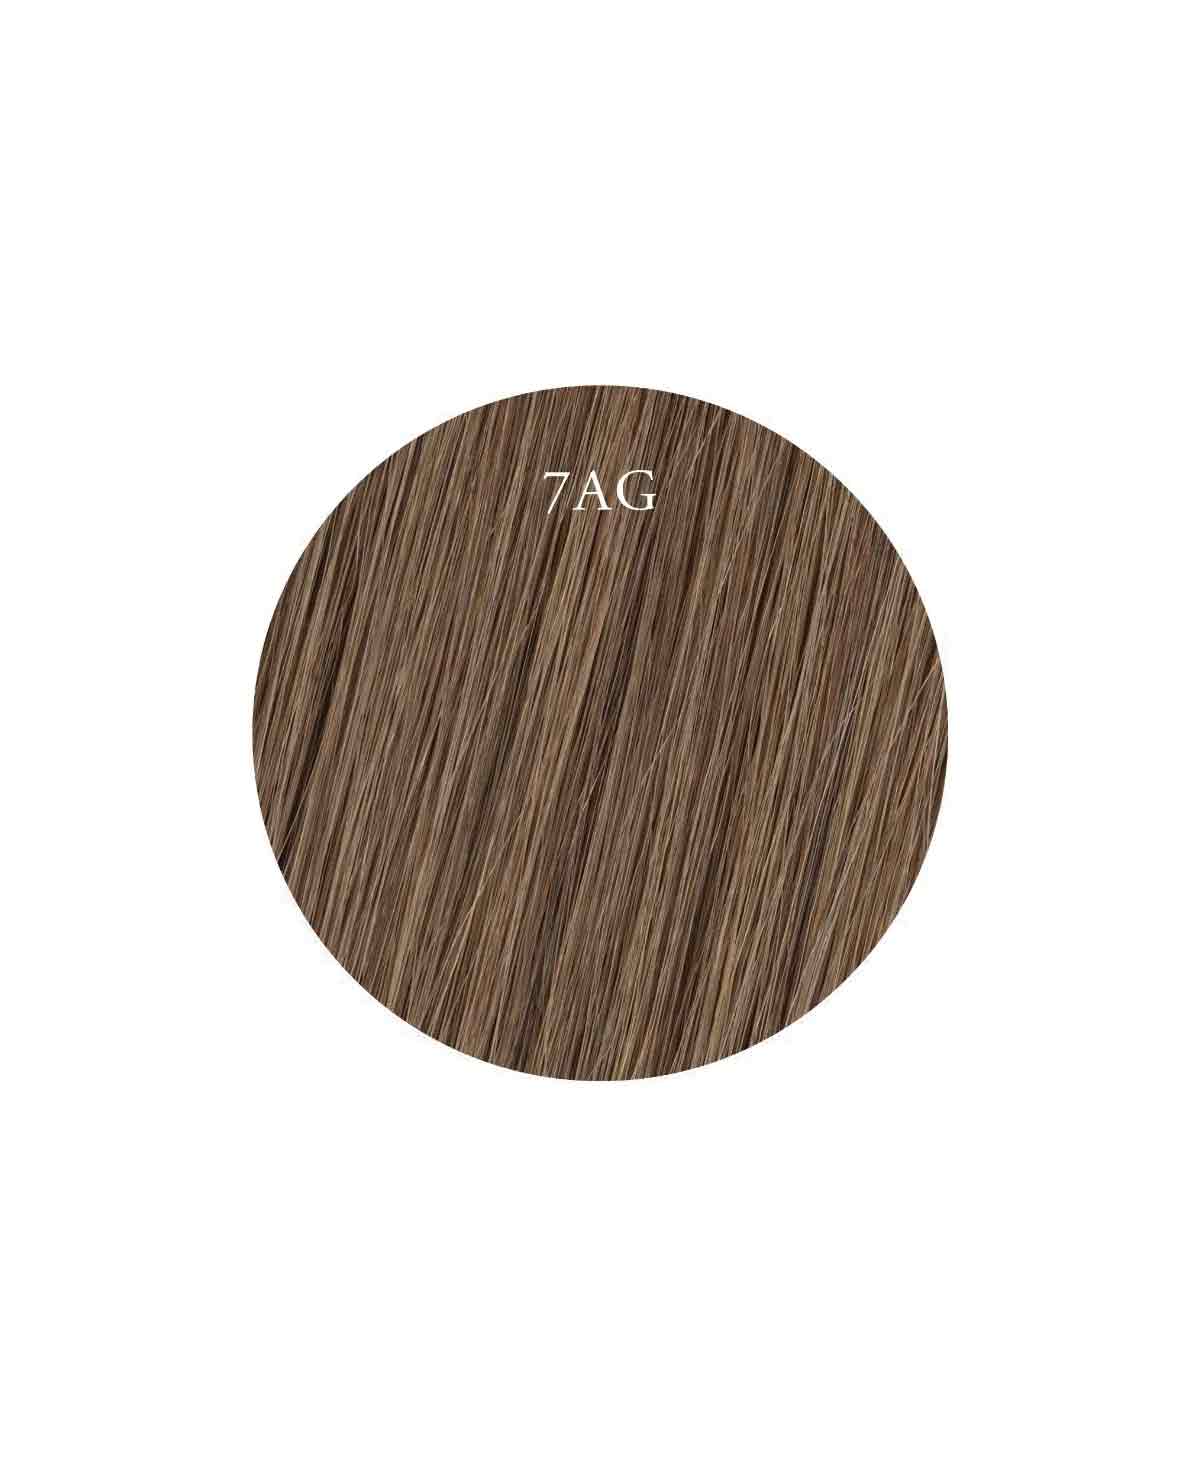 Showpony 45-50cm (20") 3 in 1 HALO Hair Exstension - 7AG Cinnamon